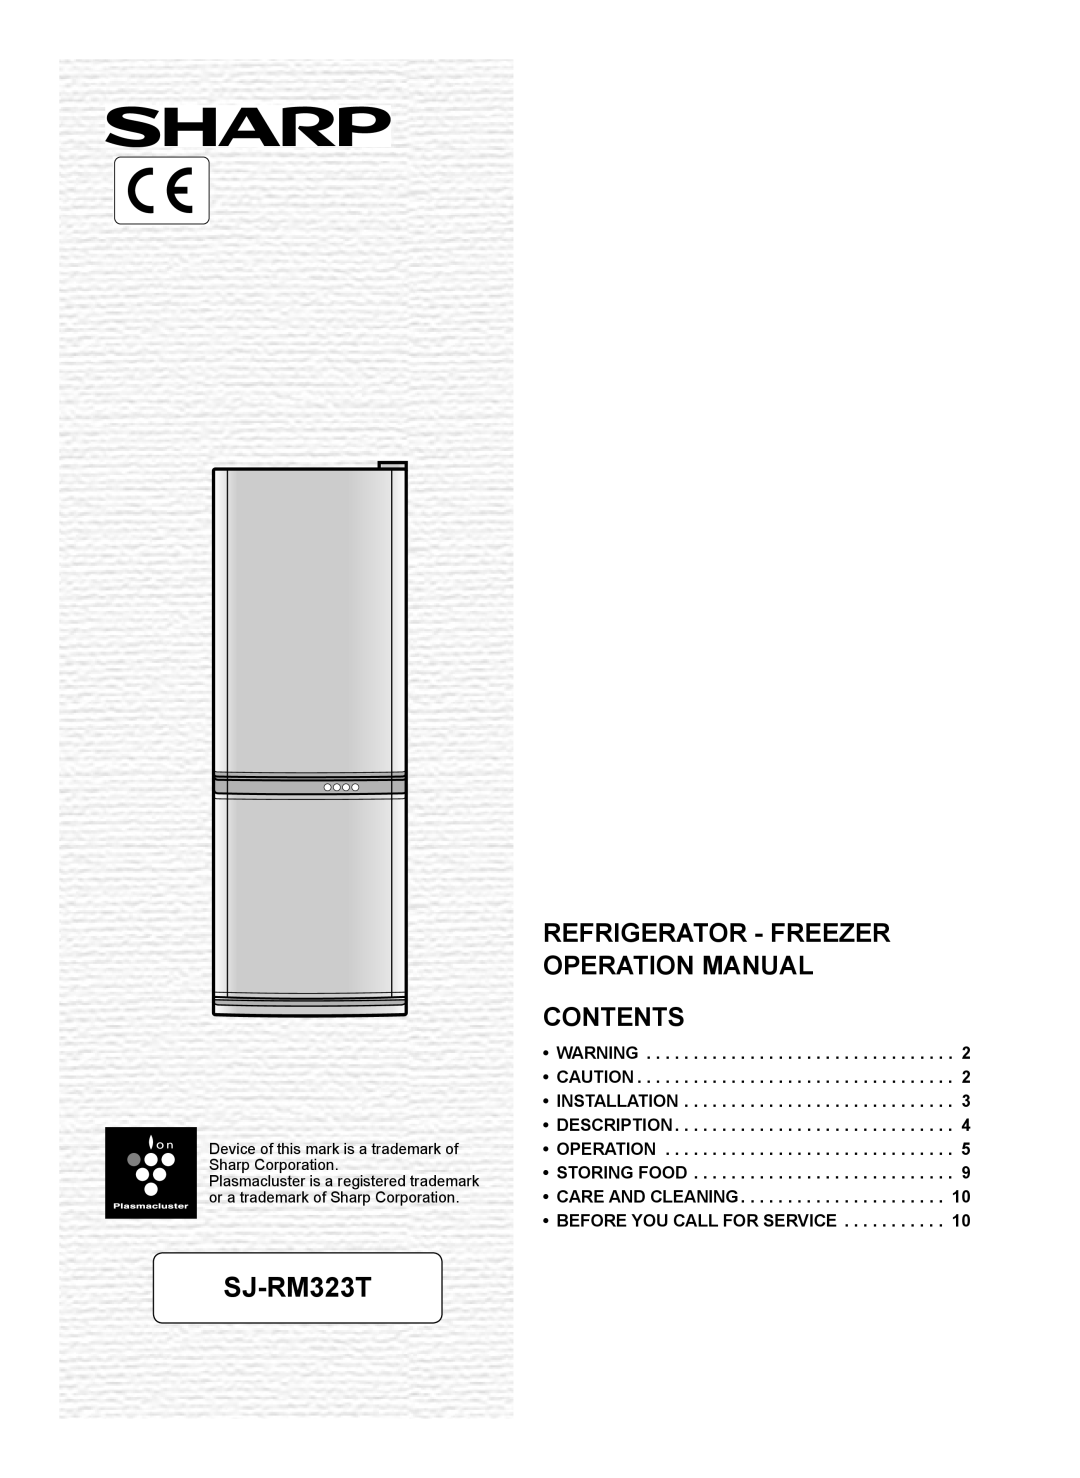 Sharp SJ-RM323T operation manual Refrigerator - Freezer, Contents, Installation, Operation, Storing Food, Description 